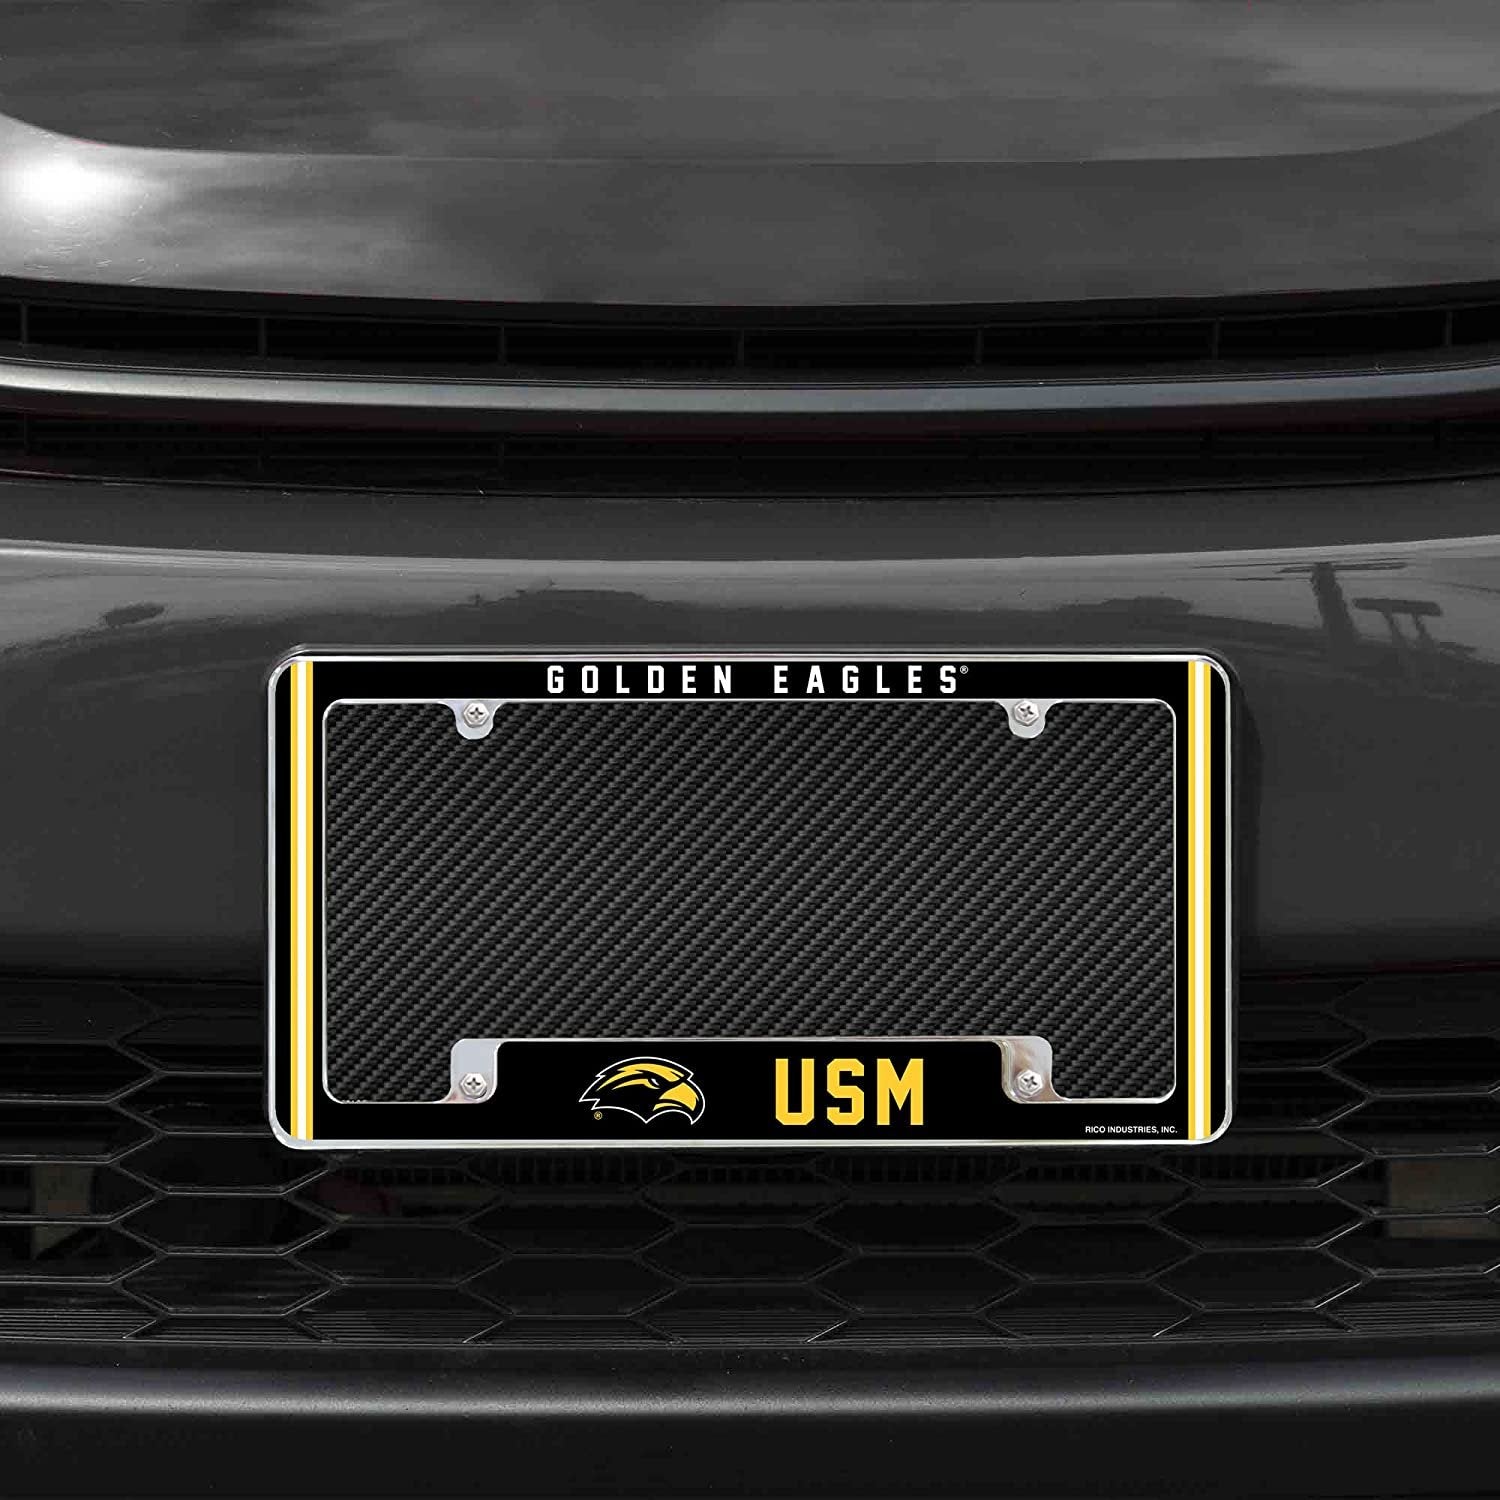 University of Southern Mississippi Golden Eagles Metal License Plate Frame Chrome Tag Cover Alternate Design 6x12 Inch